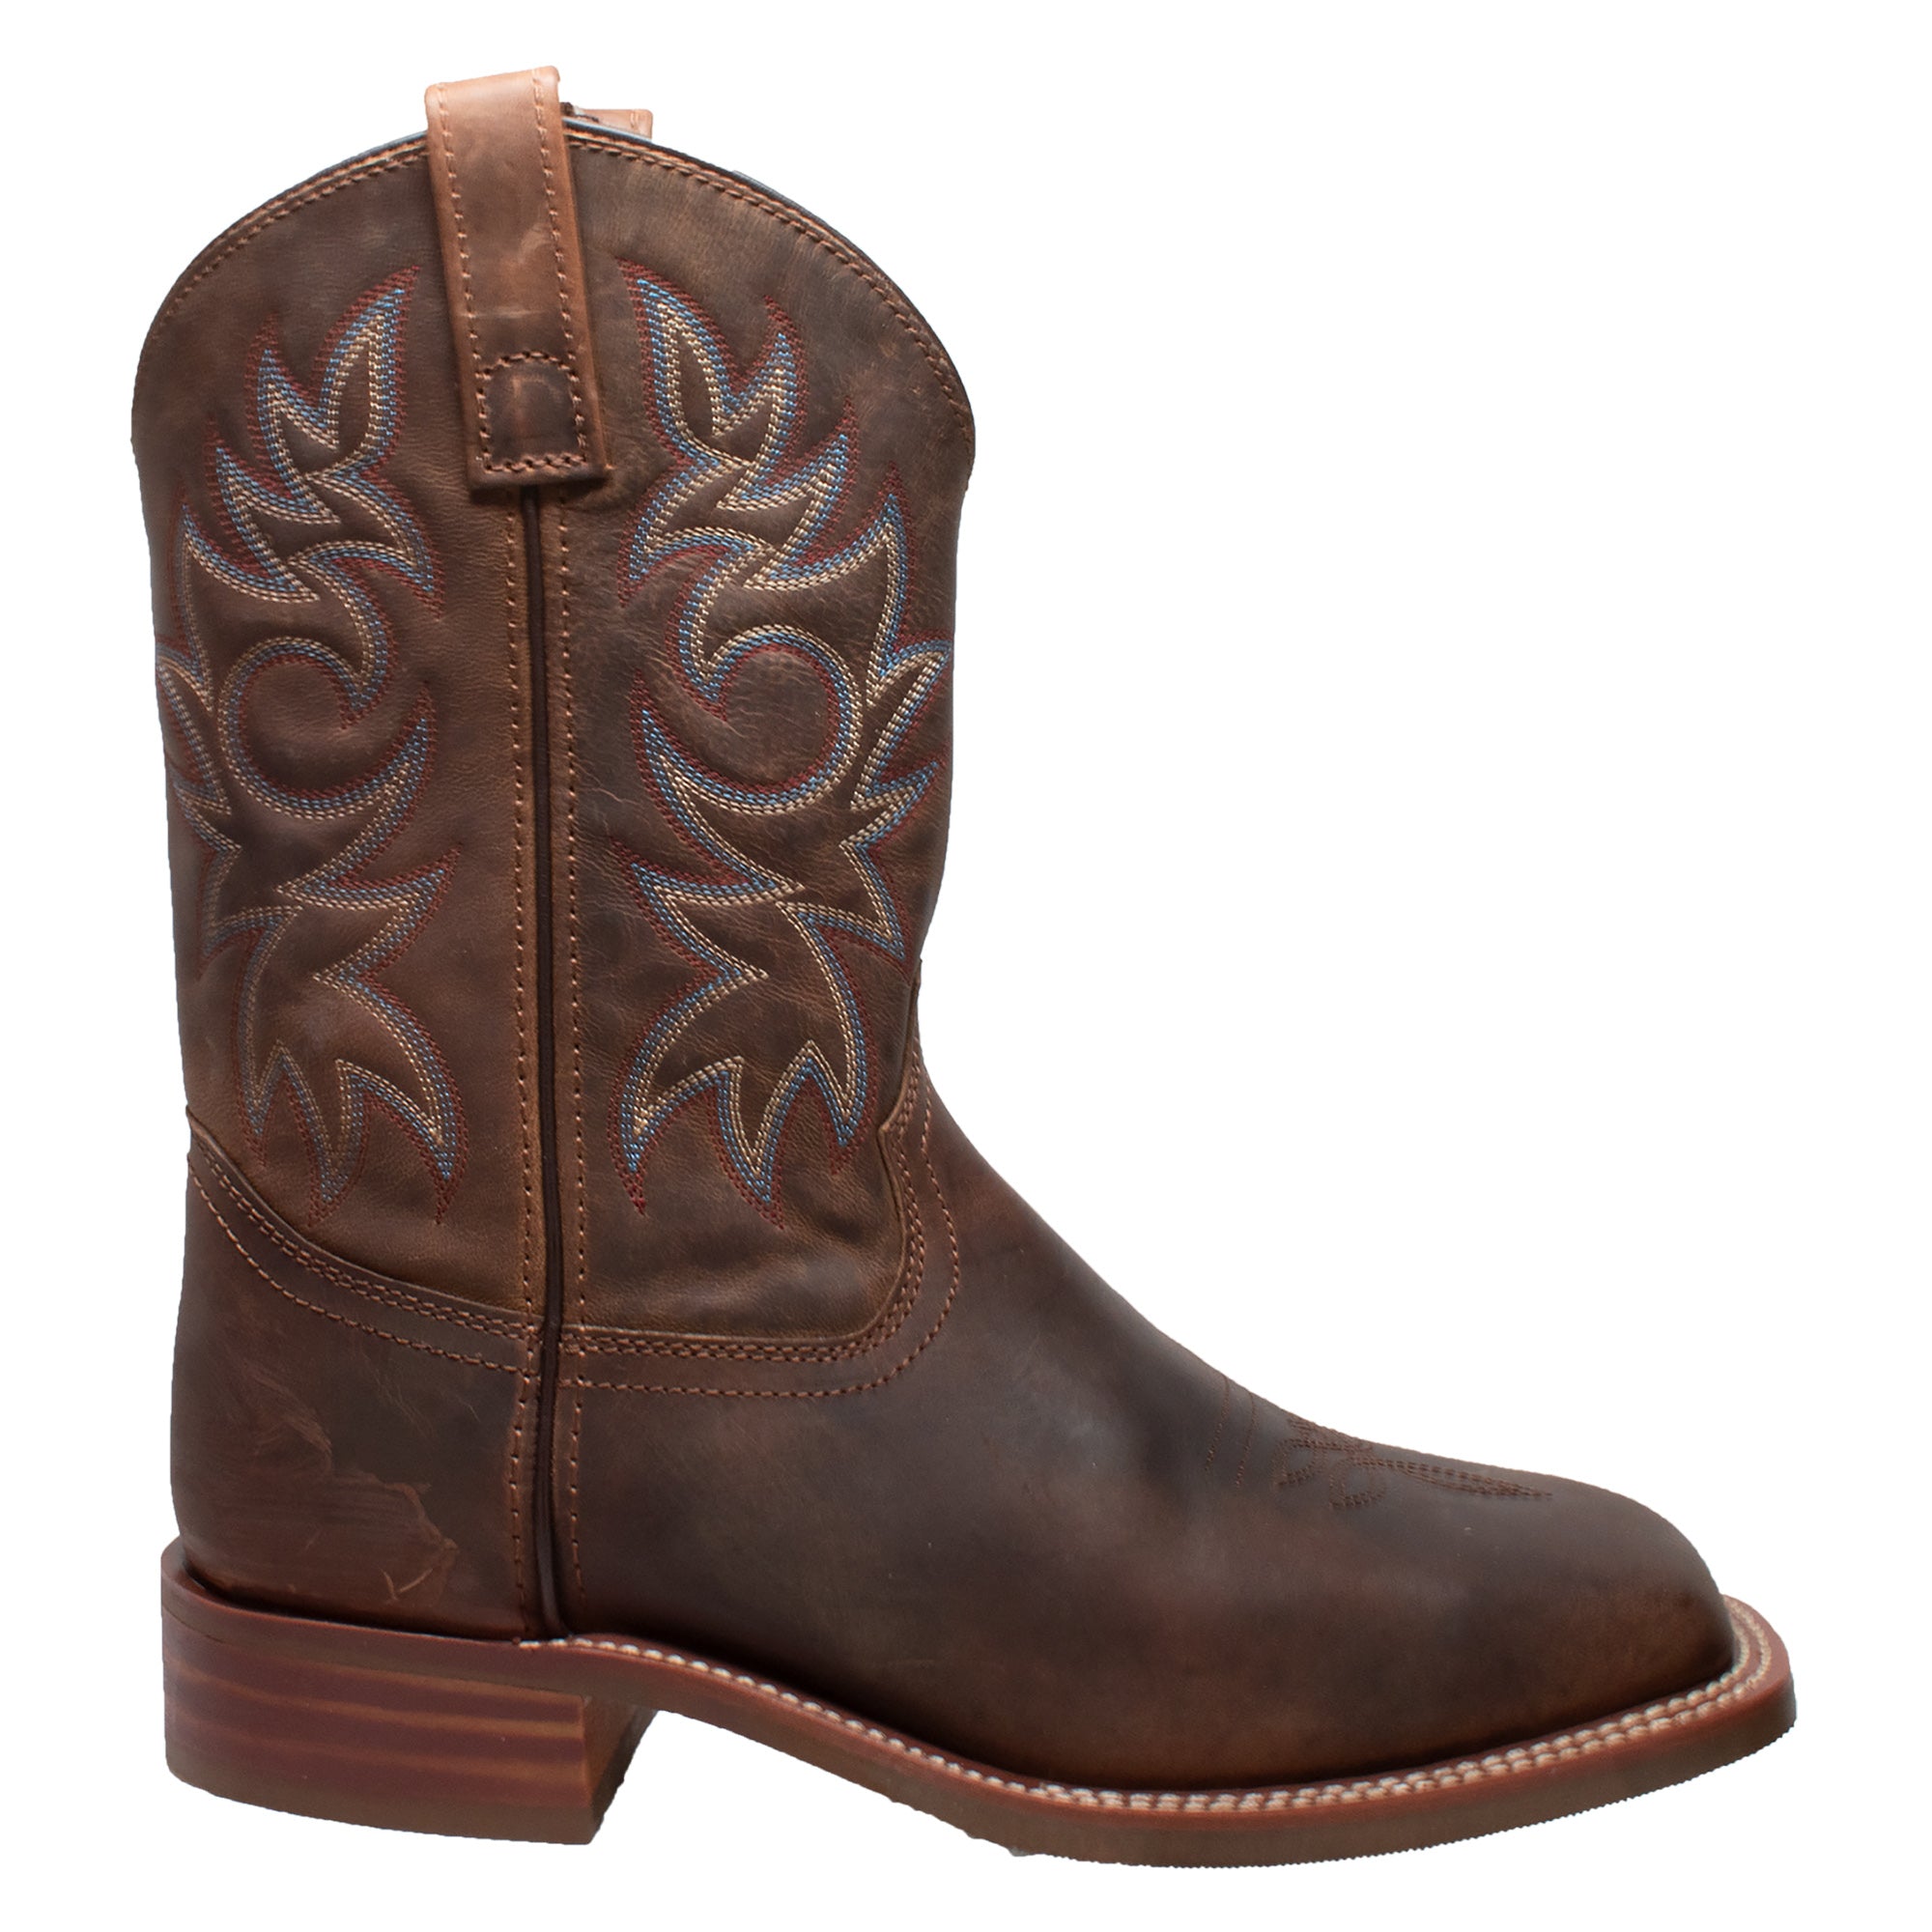 adtec western boots